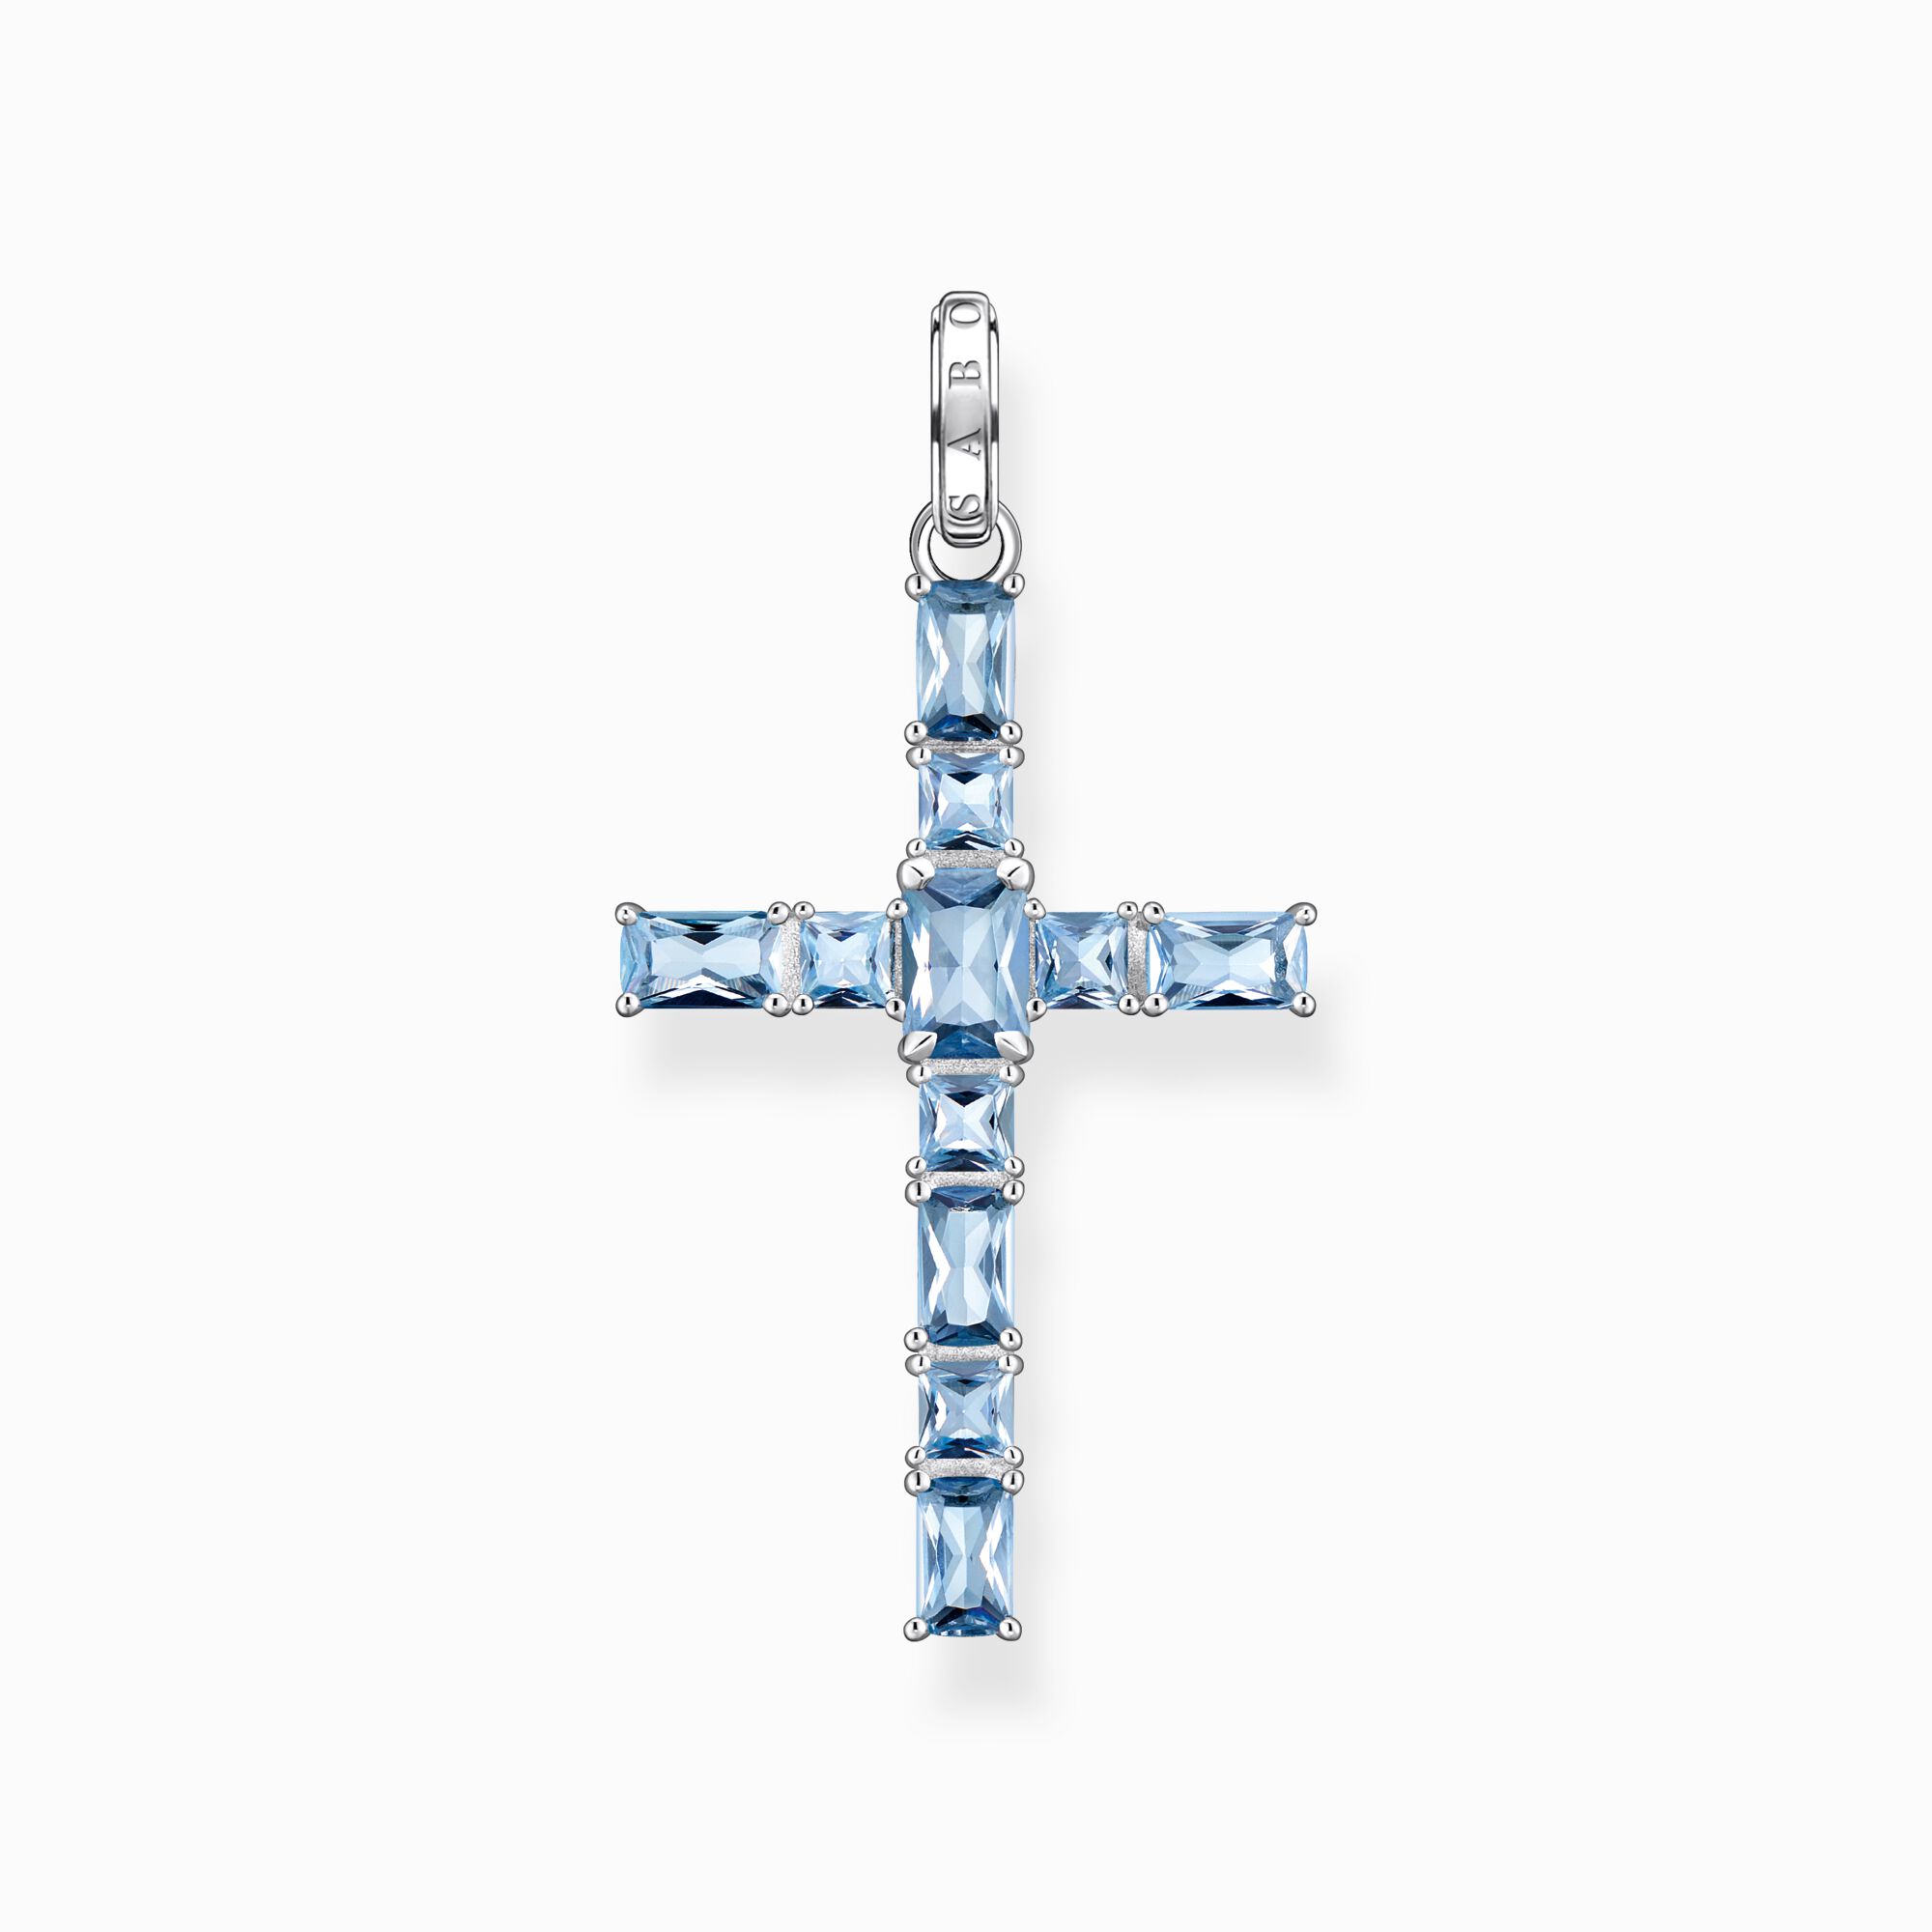 H&auml;ngsmycke kors med akvamarinbl&aring; stenar silver ur kollektionen  i THOMAS SABO:s onlineshop